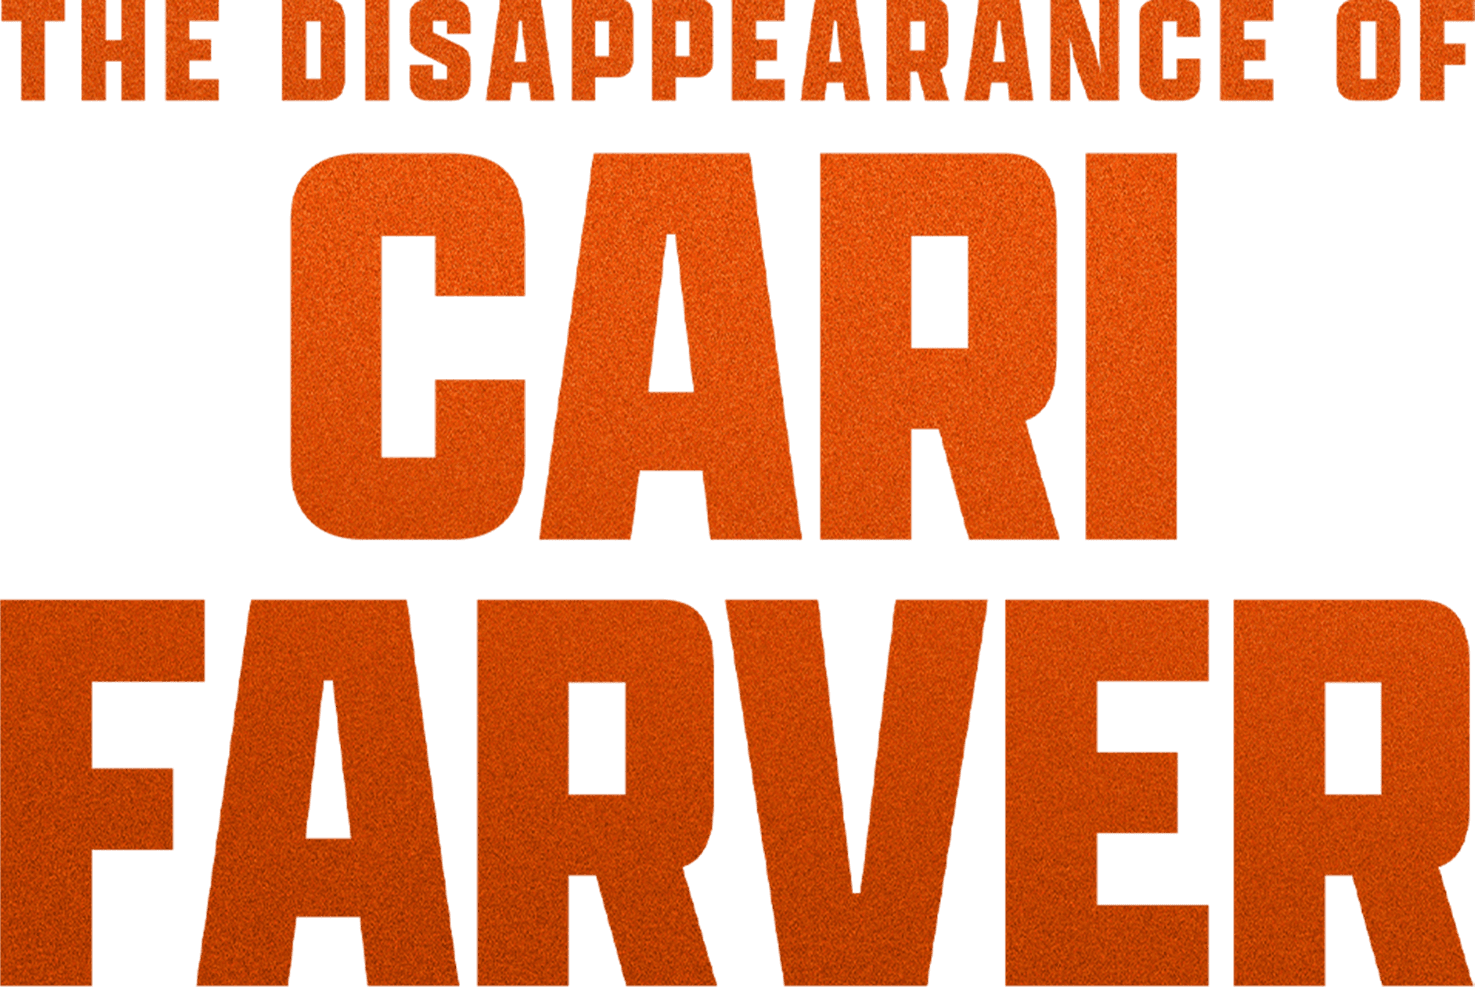 The Disappearance of Cari Farver logo